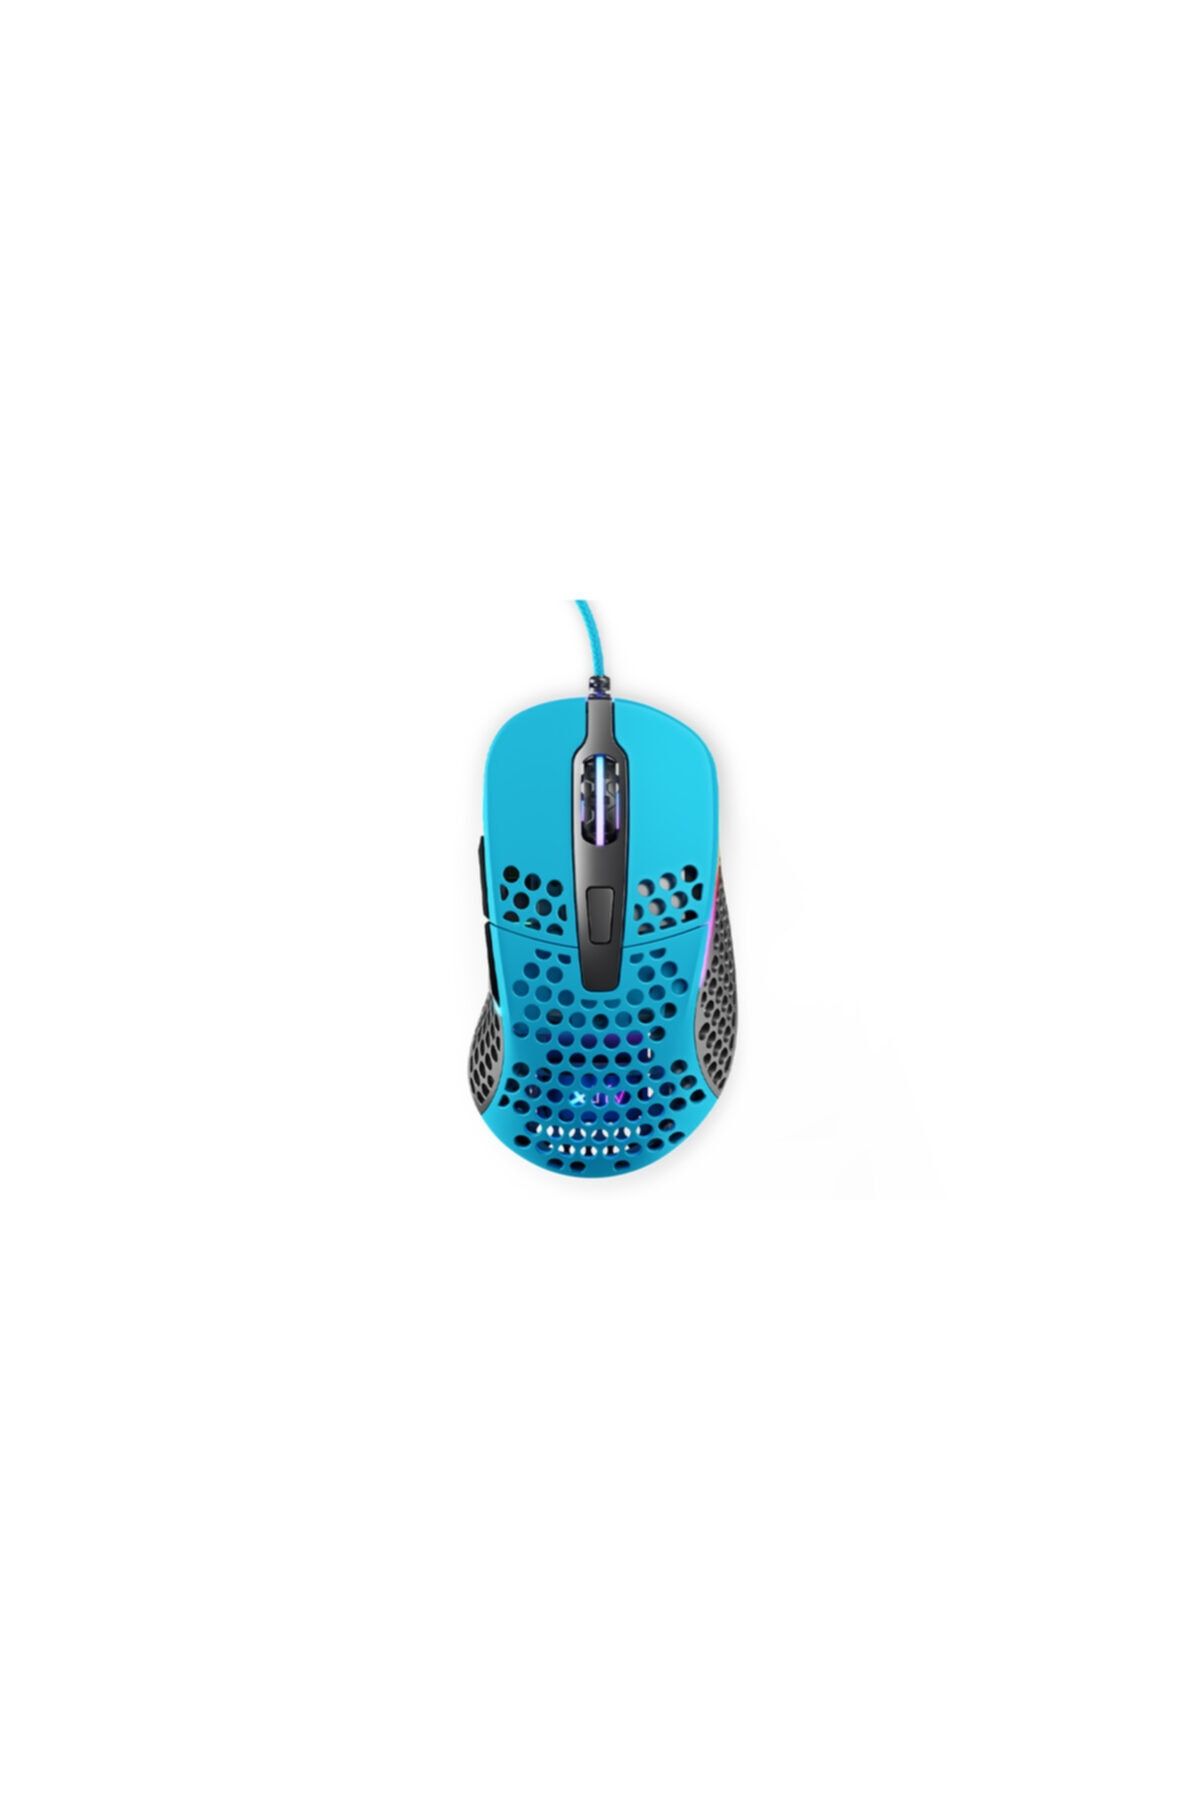 Xtrfy M4 Rgb Ultra-lıght Oyuncu Mouse Miami Blue